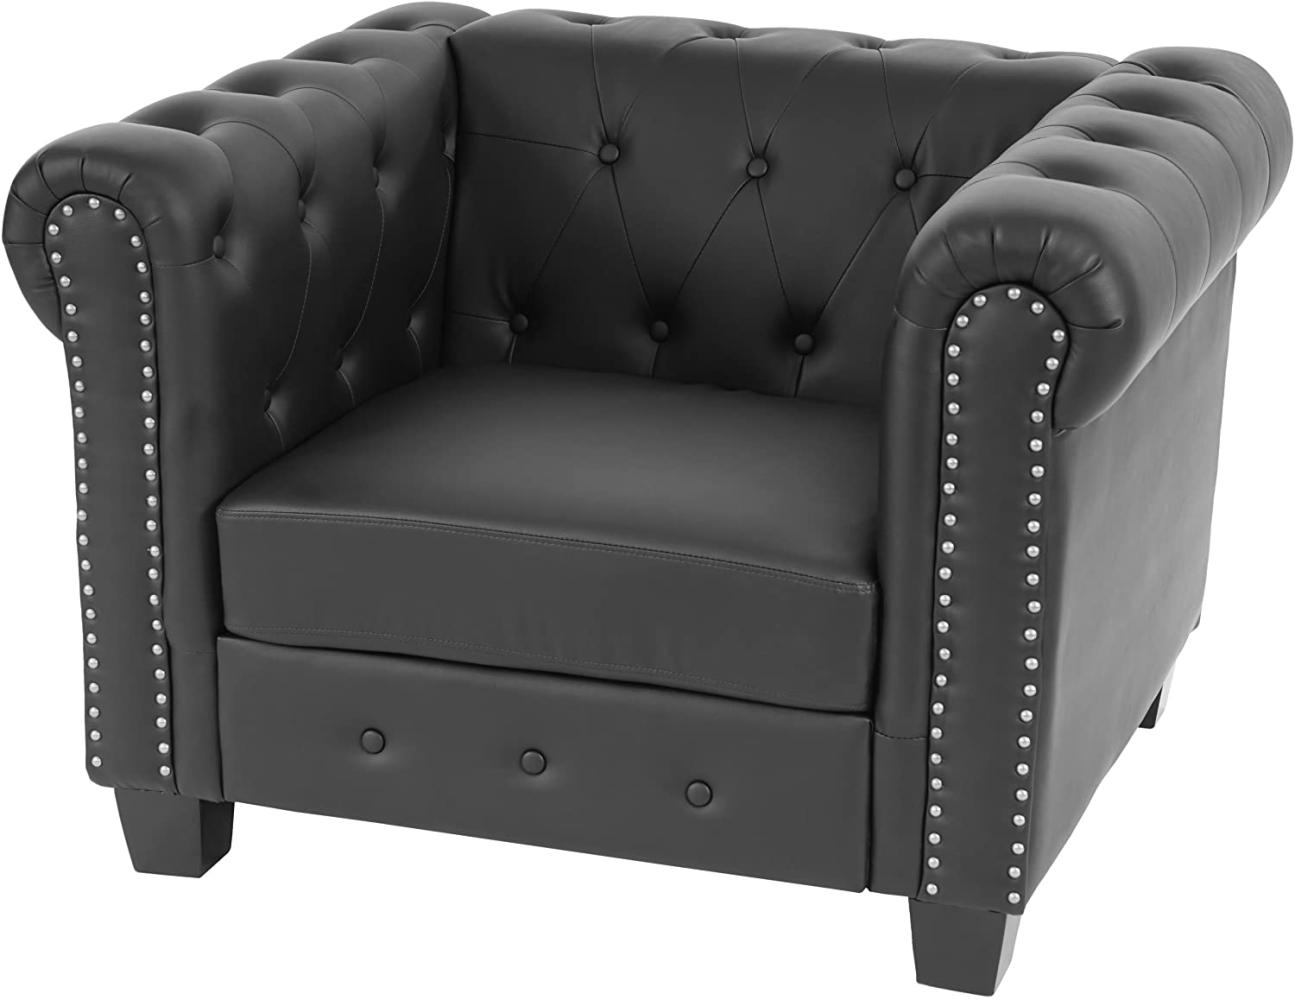 Luxus Sessel Loungesessel Relaxsessel Chesterfield Kunstleder ~ eckige Füße, schwarz Bild 1